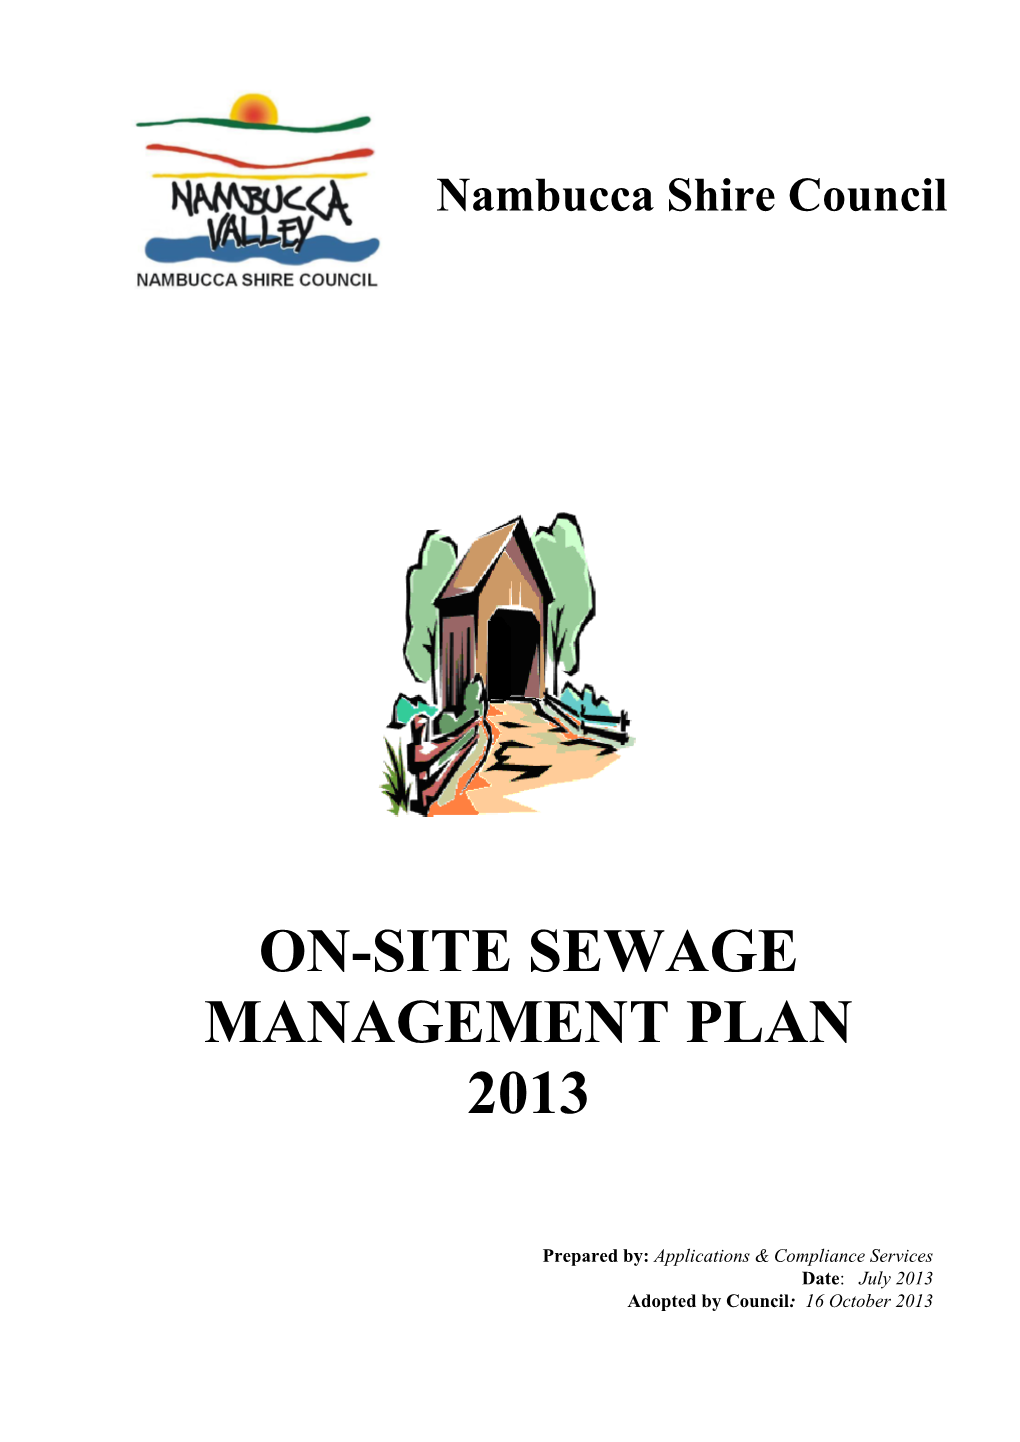 On-Site Sewage Management Plan, 2013